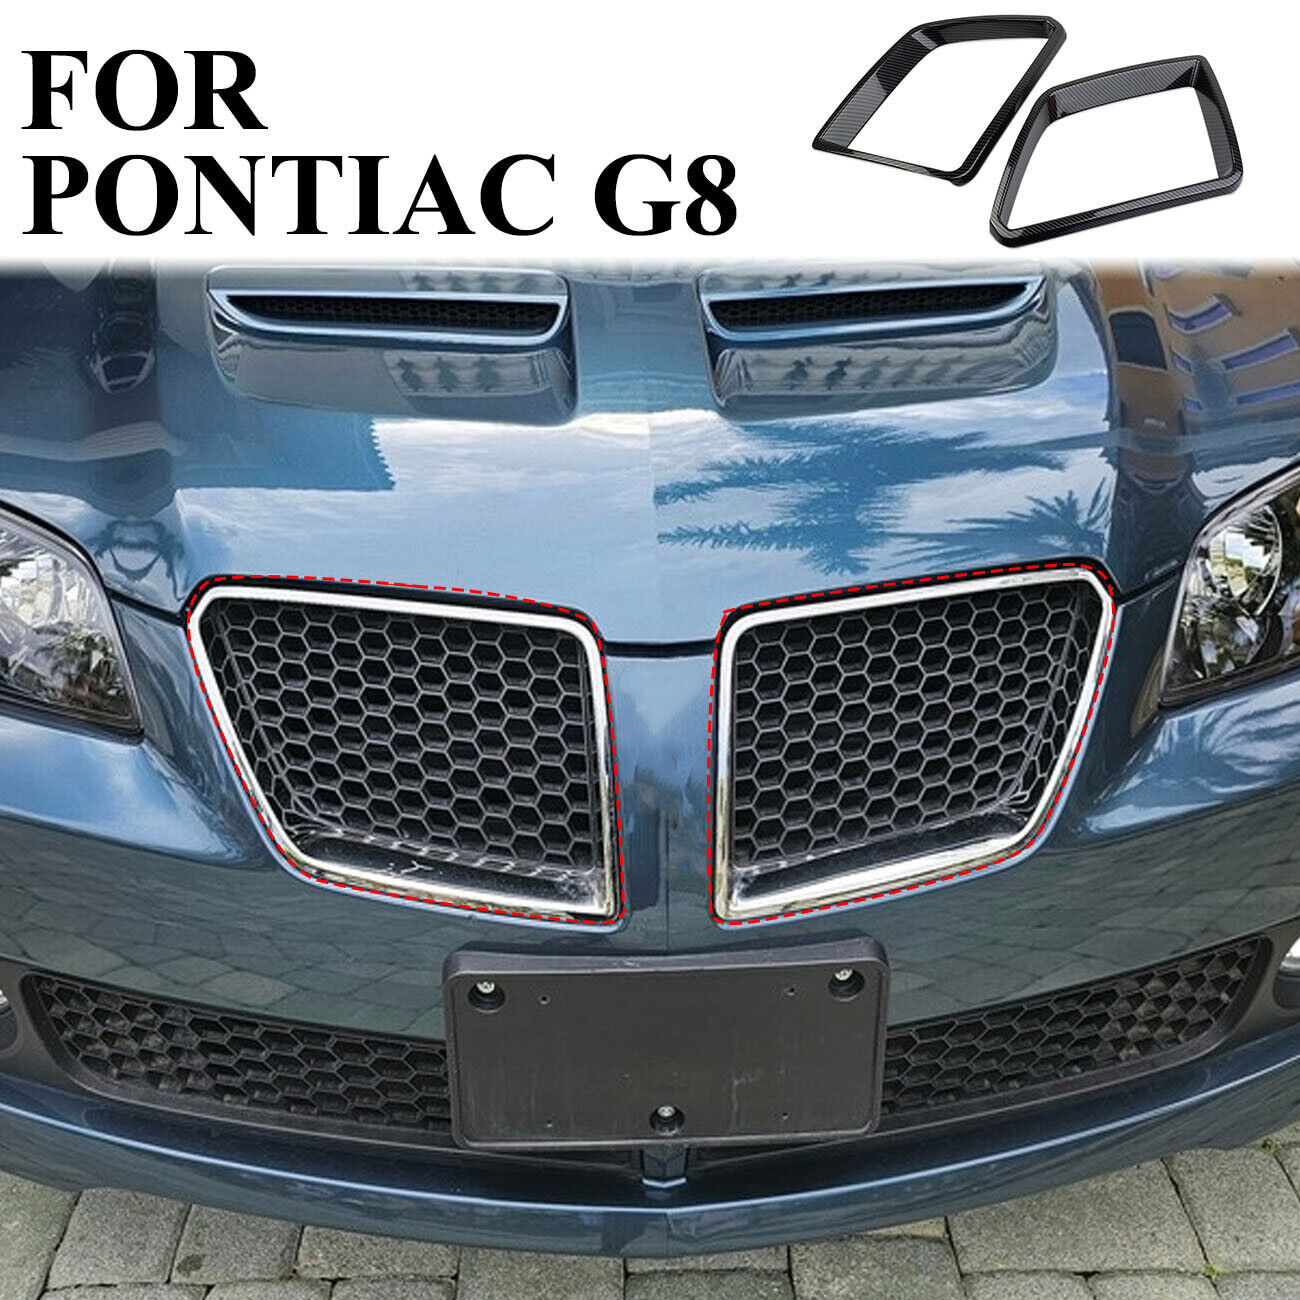 Carbon fiber exterior front honeycomb grille frame cover trim fit For Pontiac G8